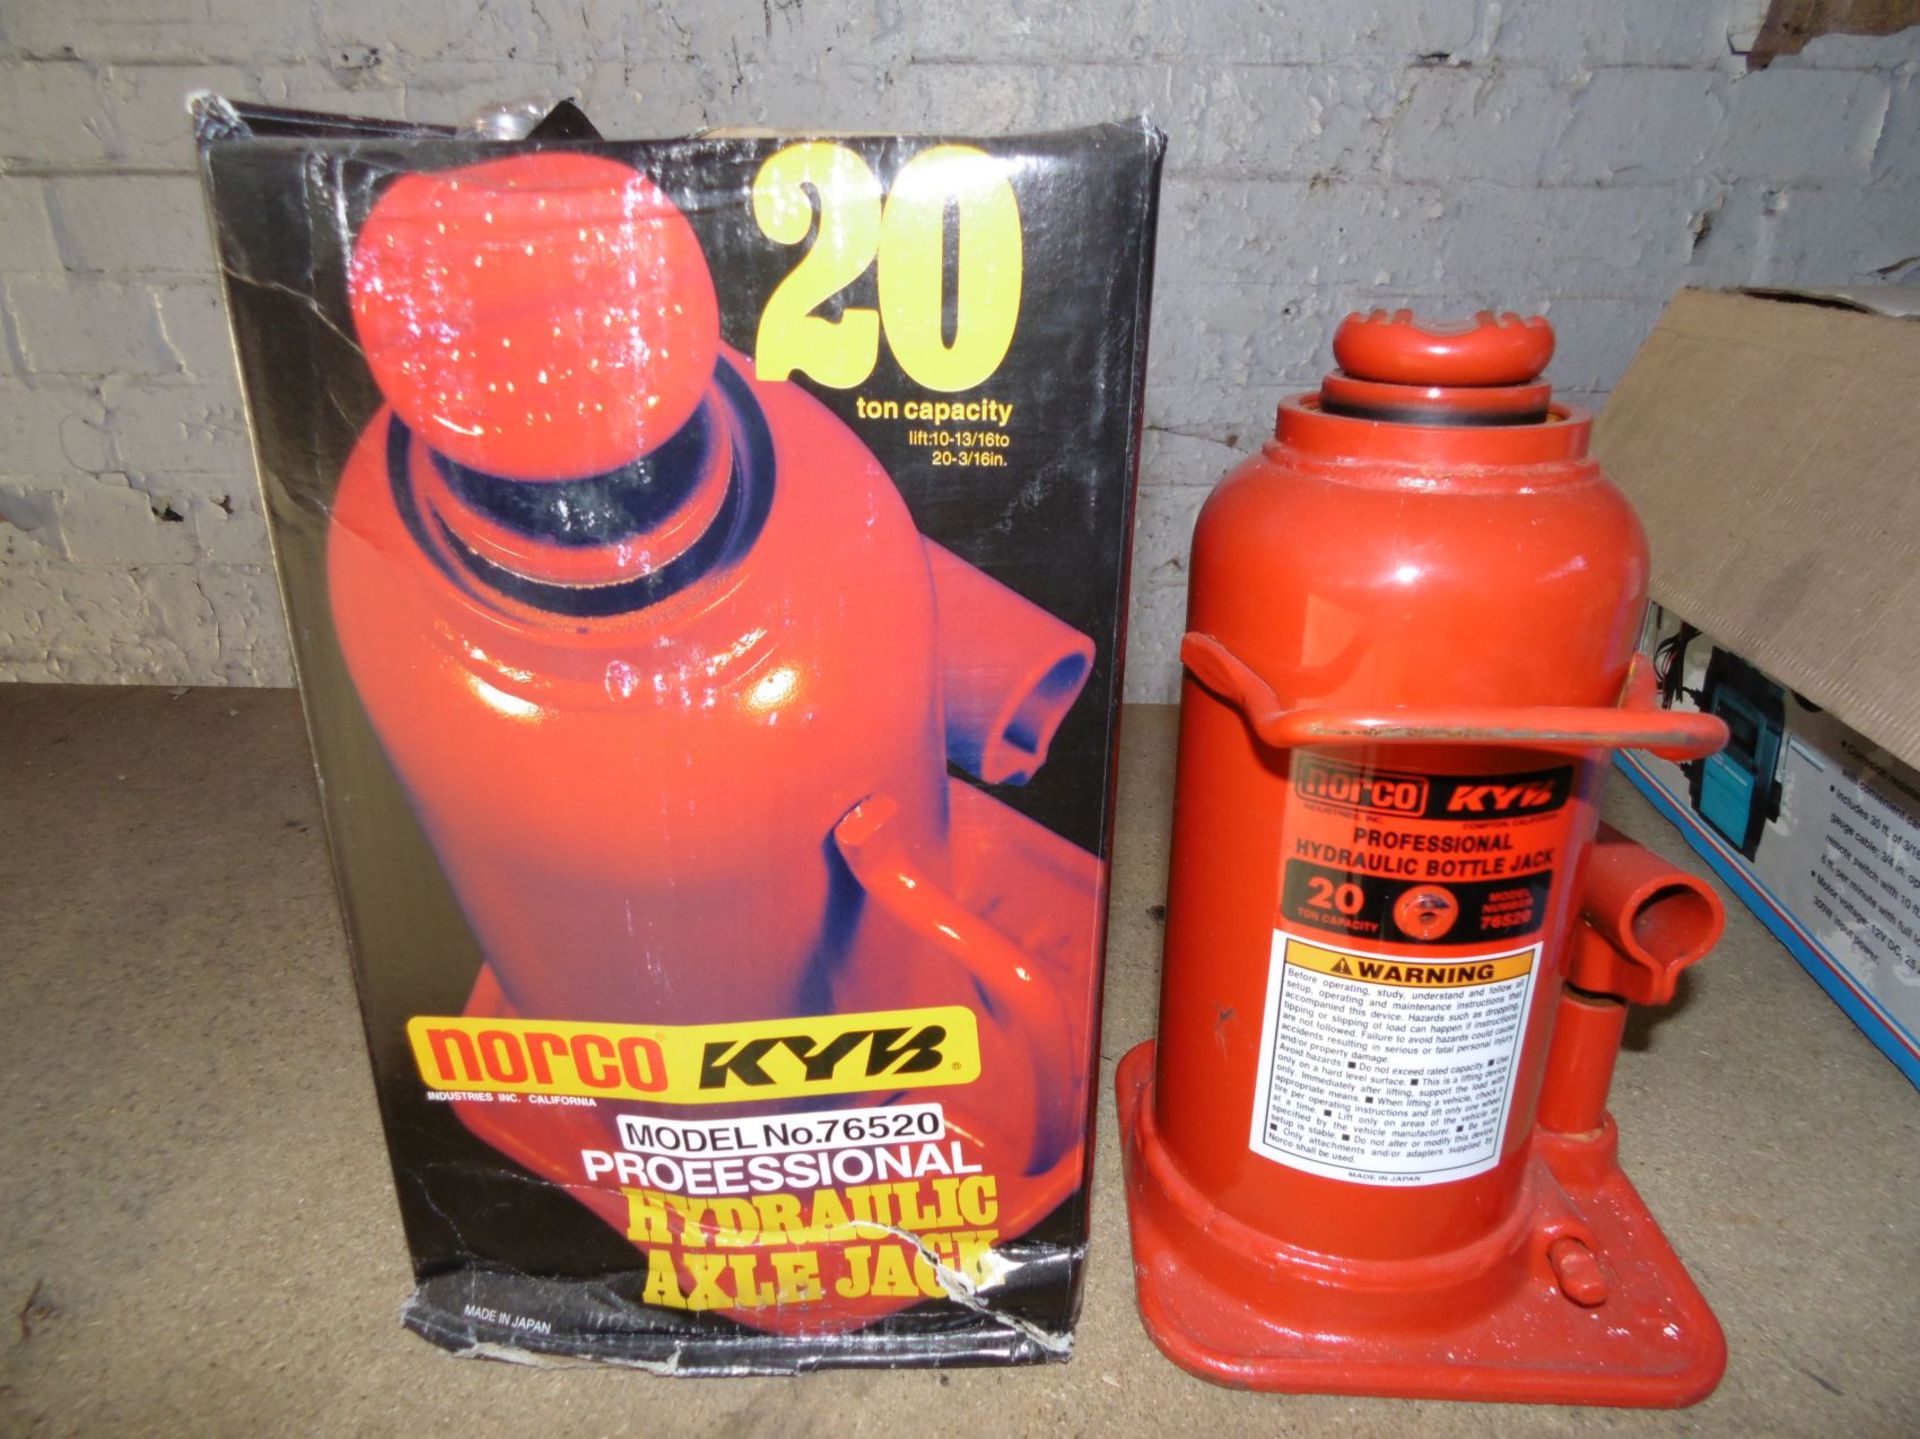 * Norco KYB heavy duty 20t bottle jack Model No.76520, new, ex Caterpillar